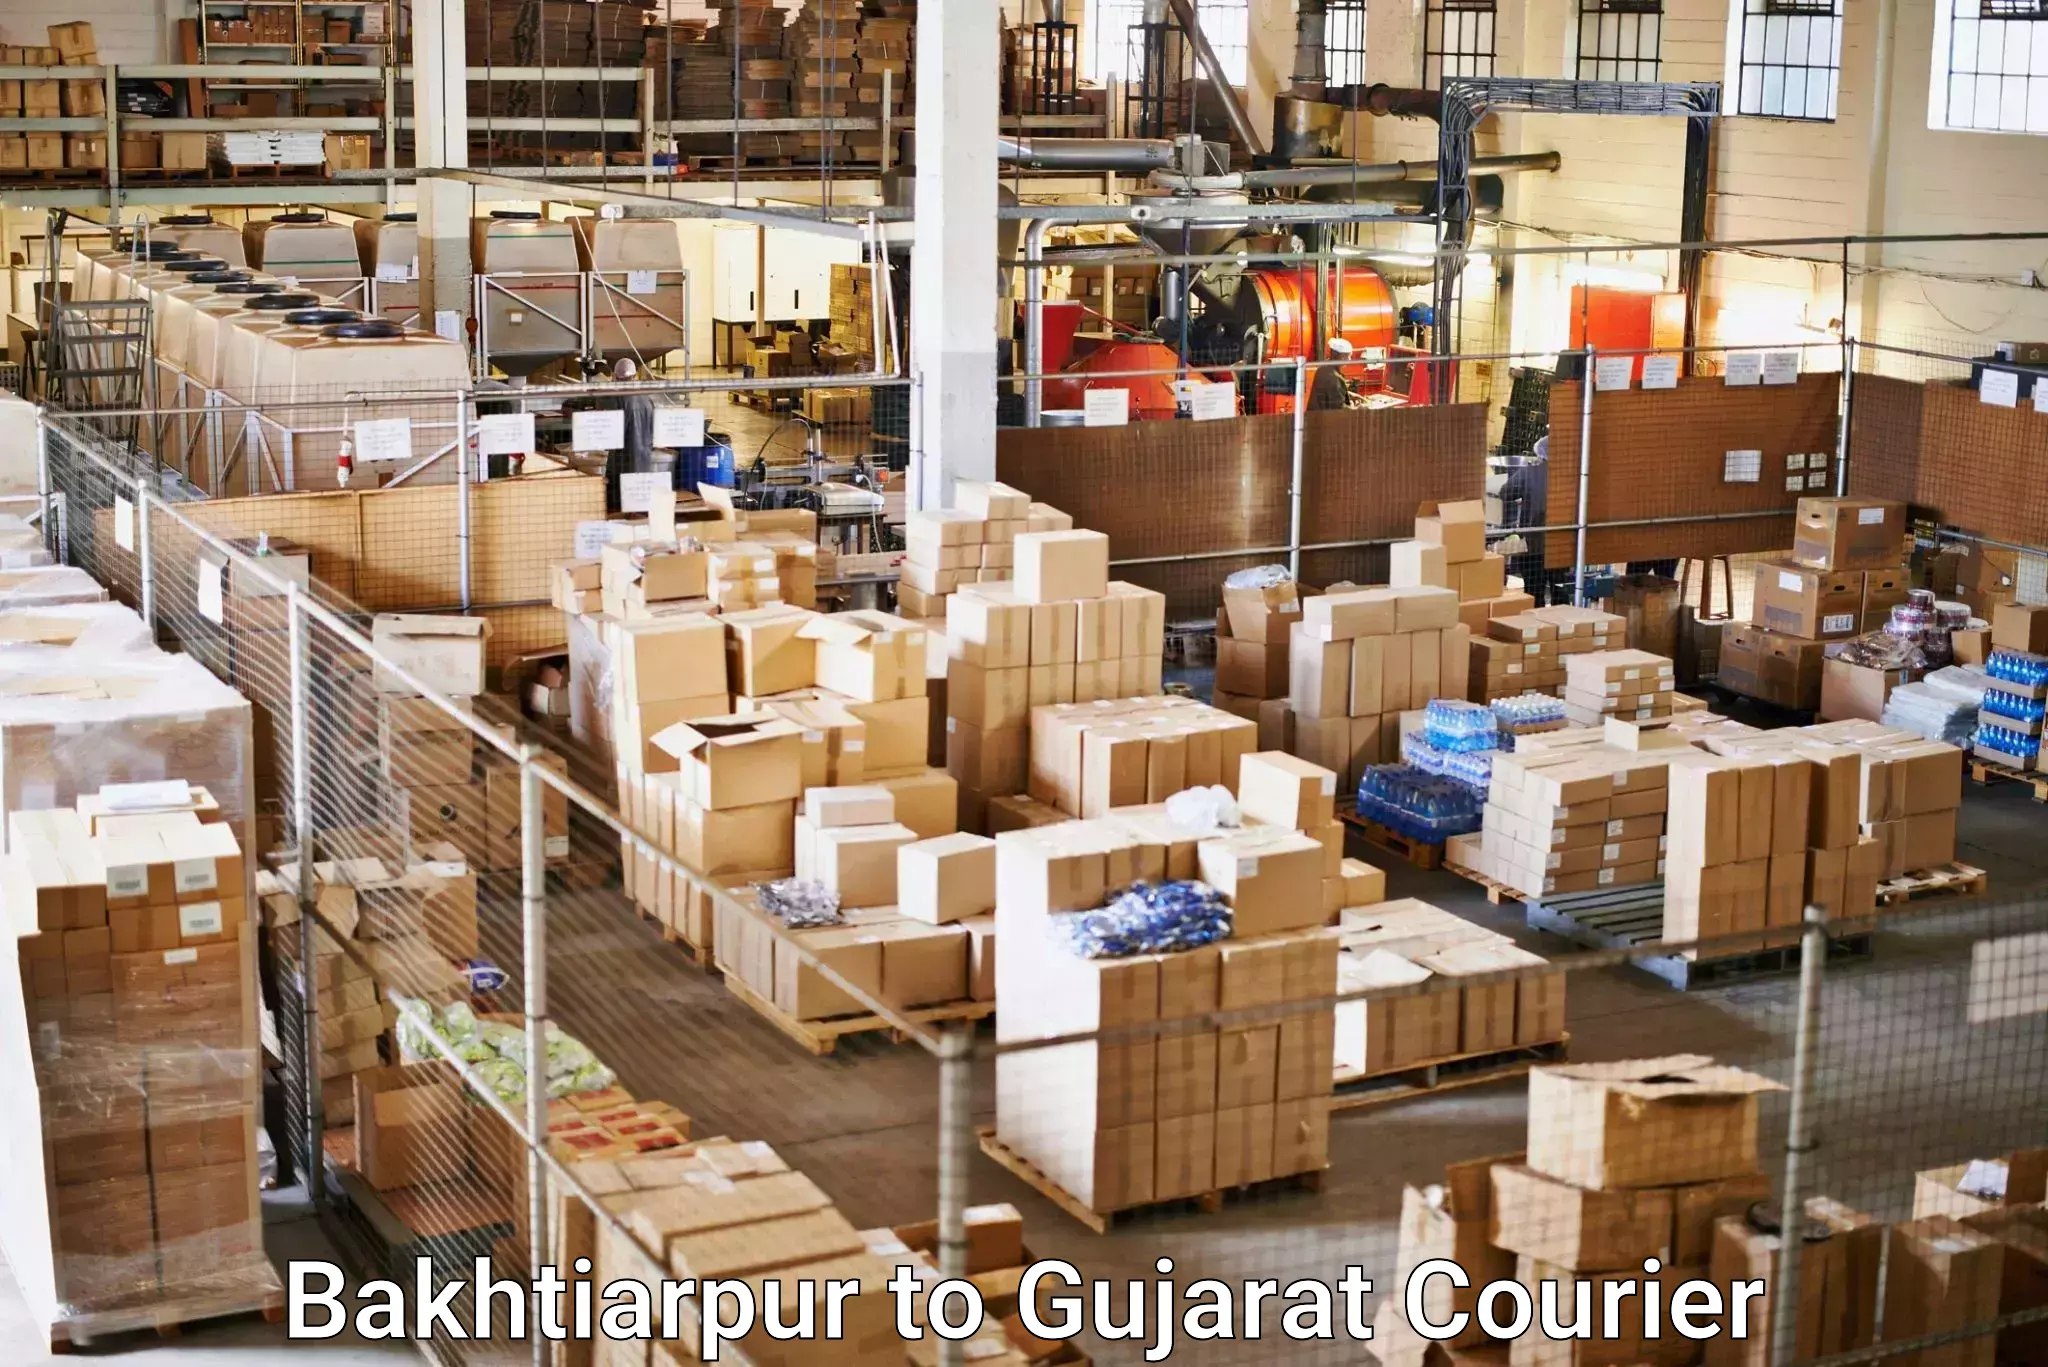 Comprehensive logistics Bakhtiarpur to Anand